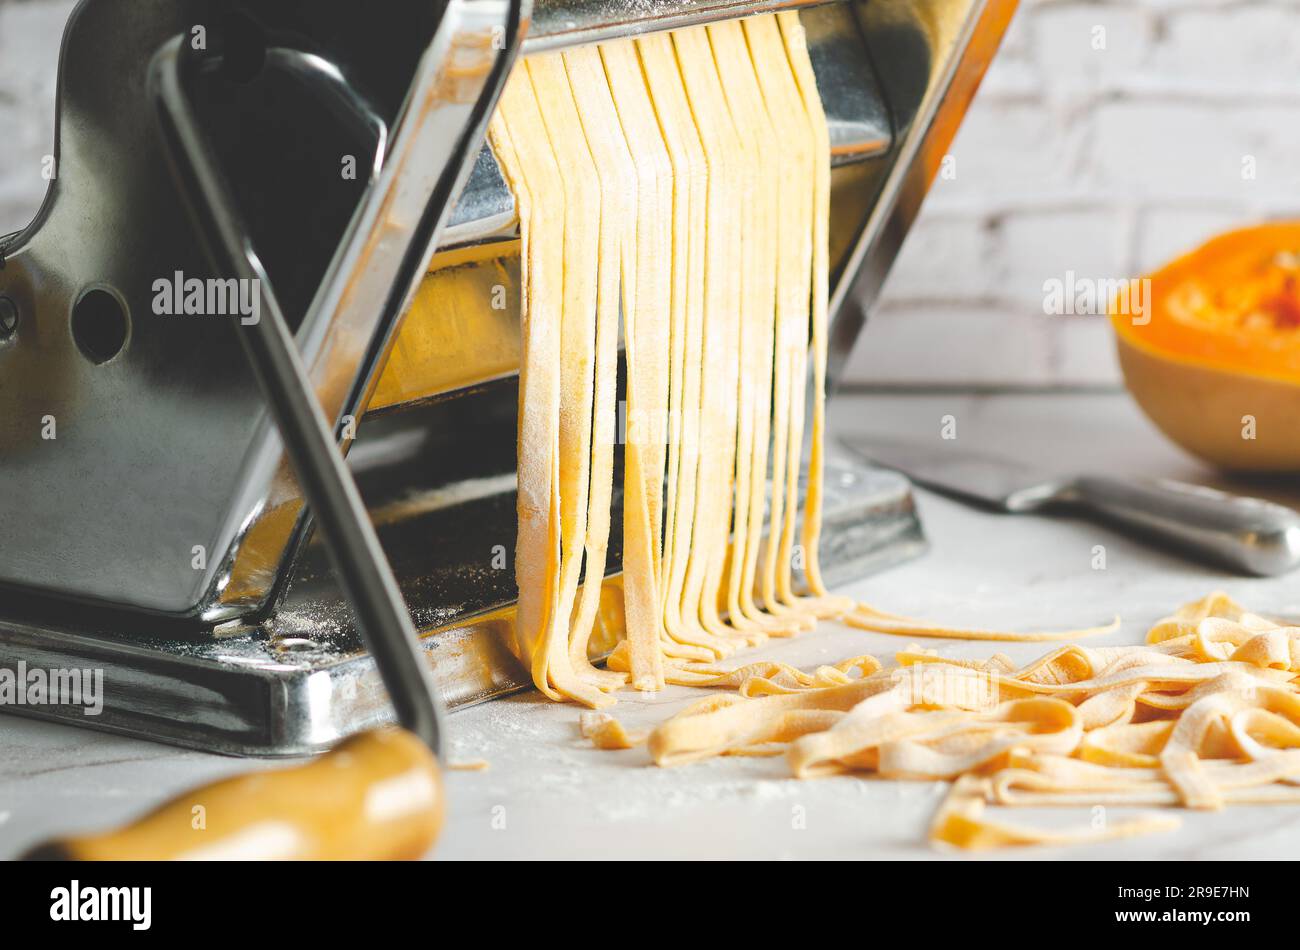 https://c8.alamy.com/comp/2R9E7HN/butternut-squash-noodles-in-a-pasta-maker-machine-a-knife-and-a-piece-of-butternut-squash-on-marble-background-2R9E7HN.jpg